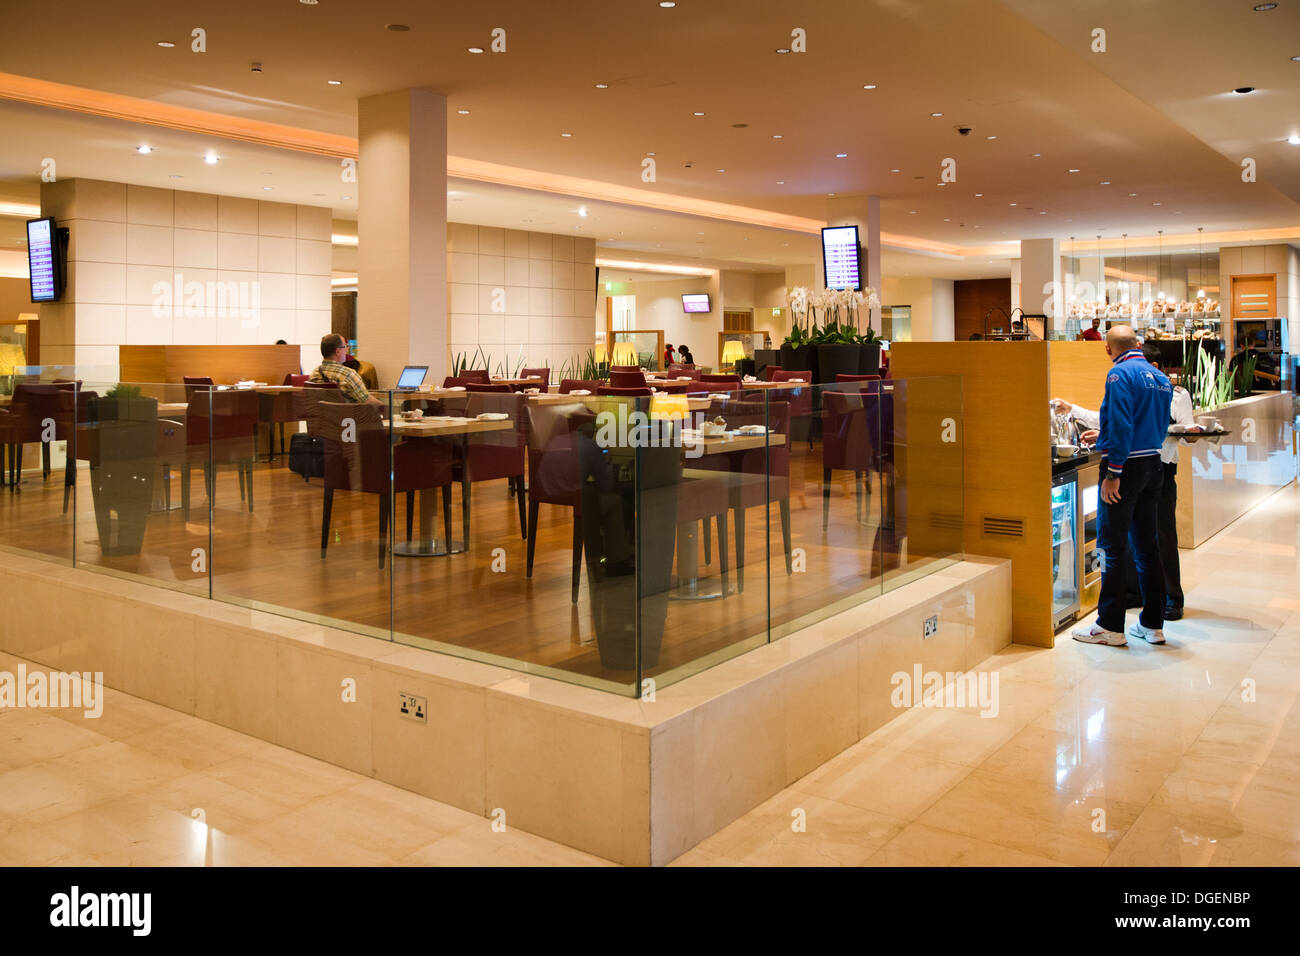 Qatar, U.A.E. Doha Airport, passengers in Premium Business Class Terminal dining area Stock Photo